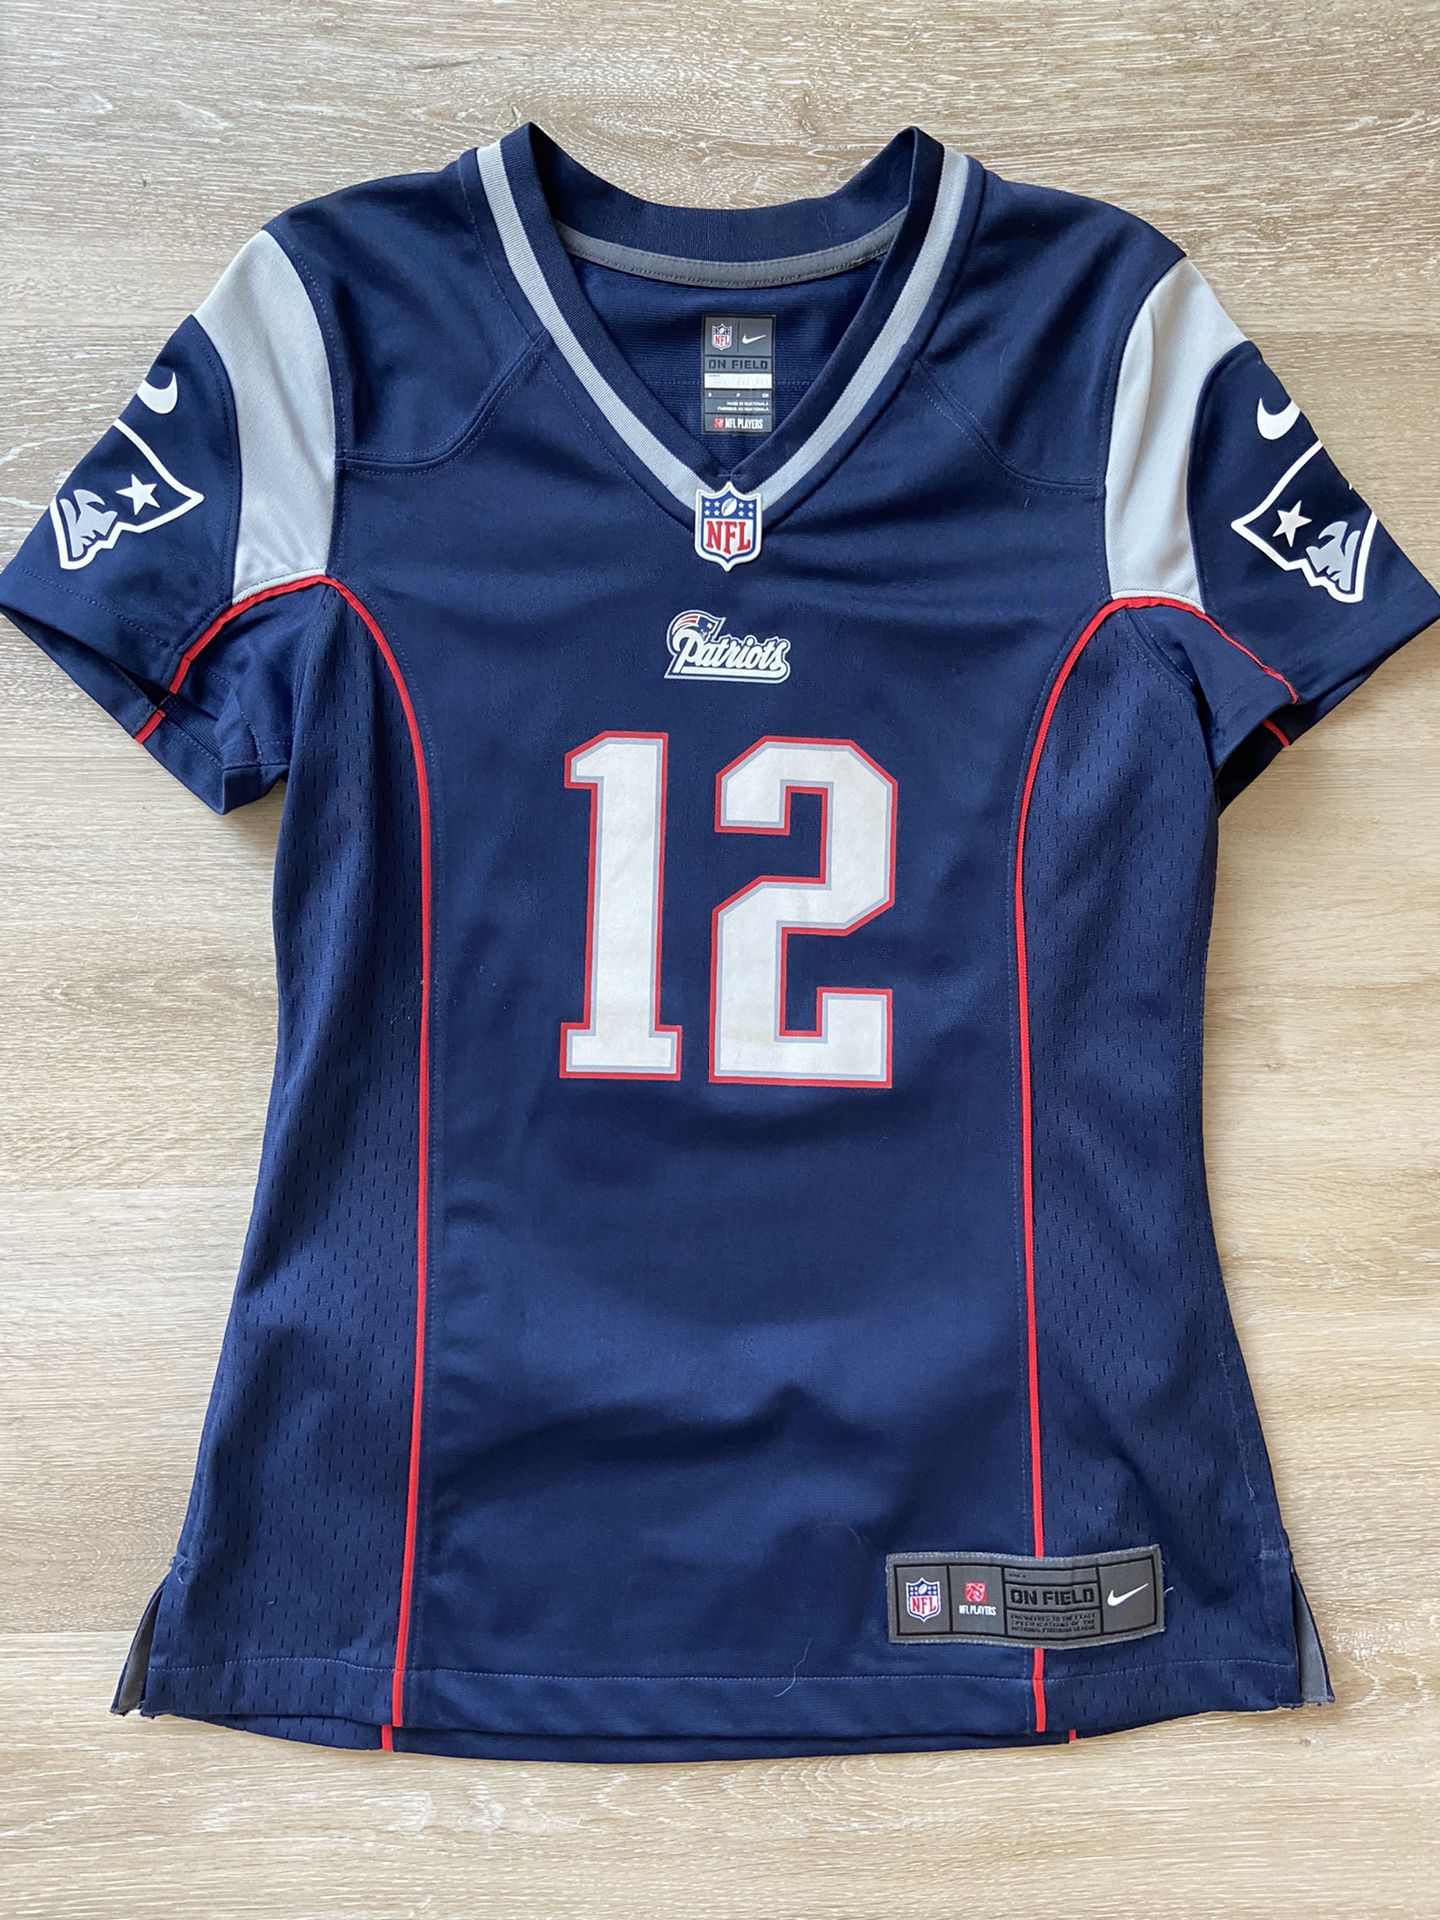 NFL Patriots #12 Tom Brady Jersey